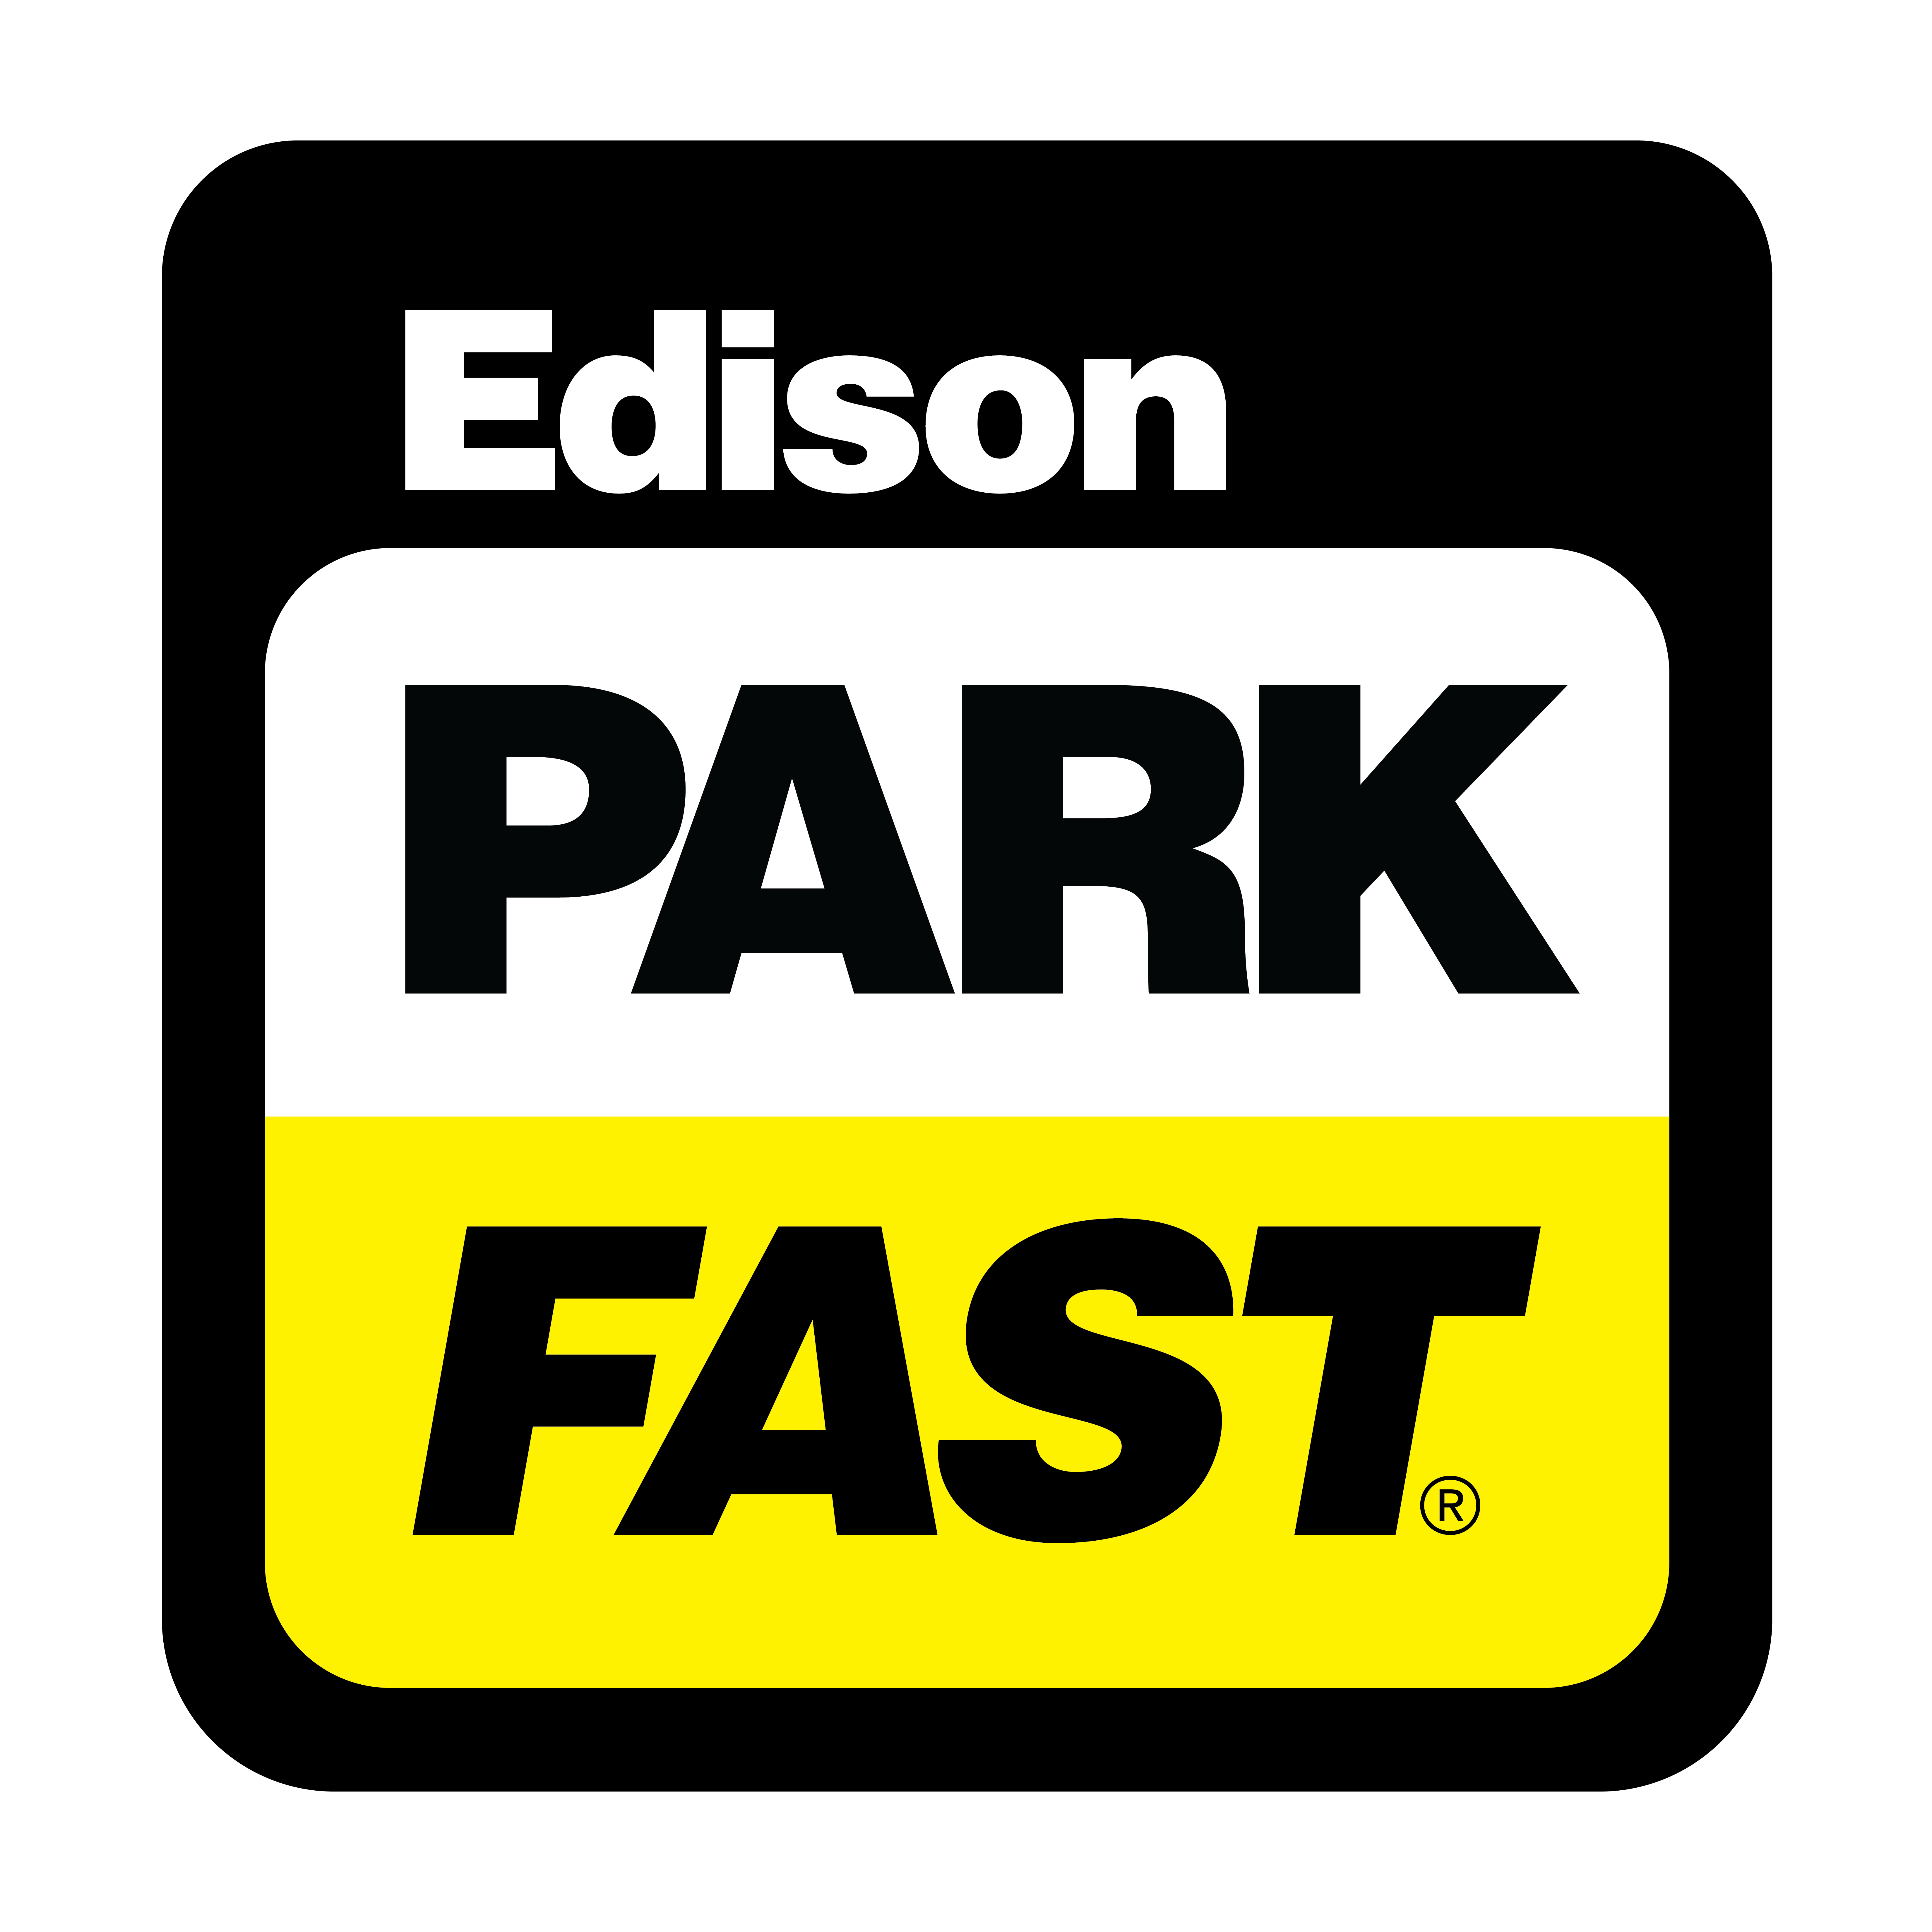 Edison ParkFast - New York, NY 10034 - (888)727-5327 | ShowMeLocal.com